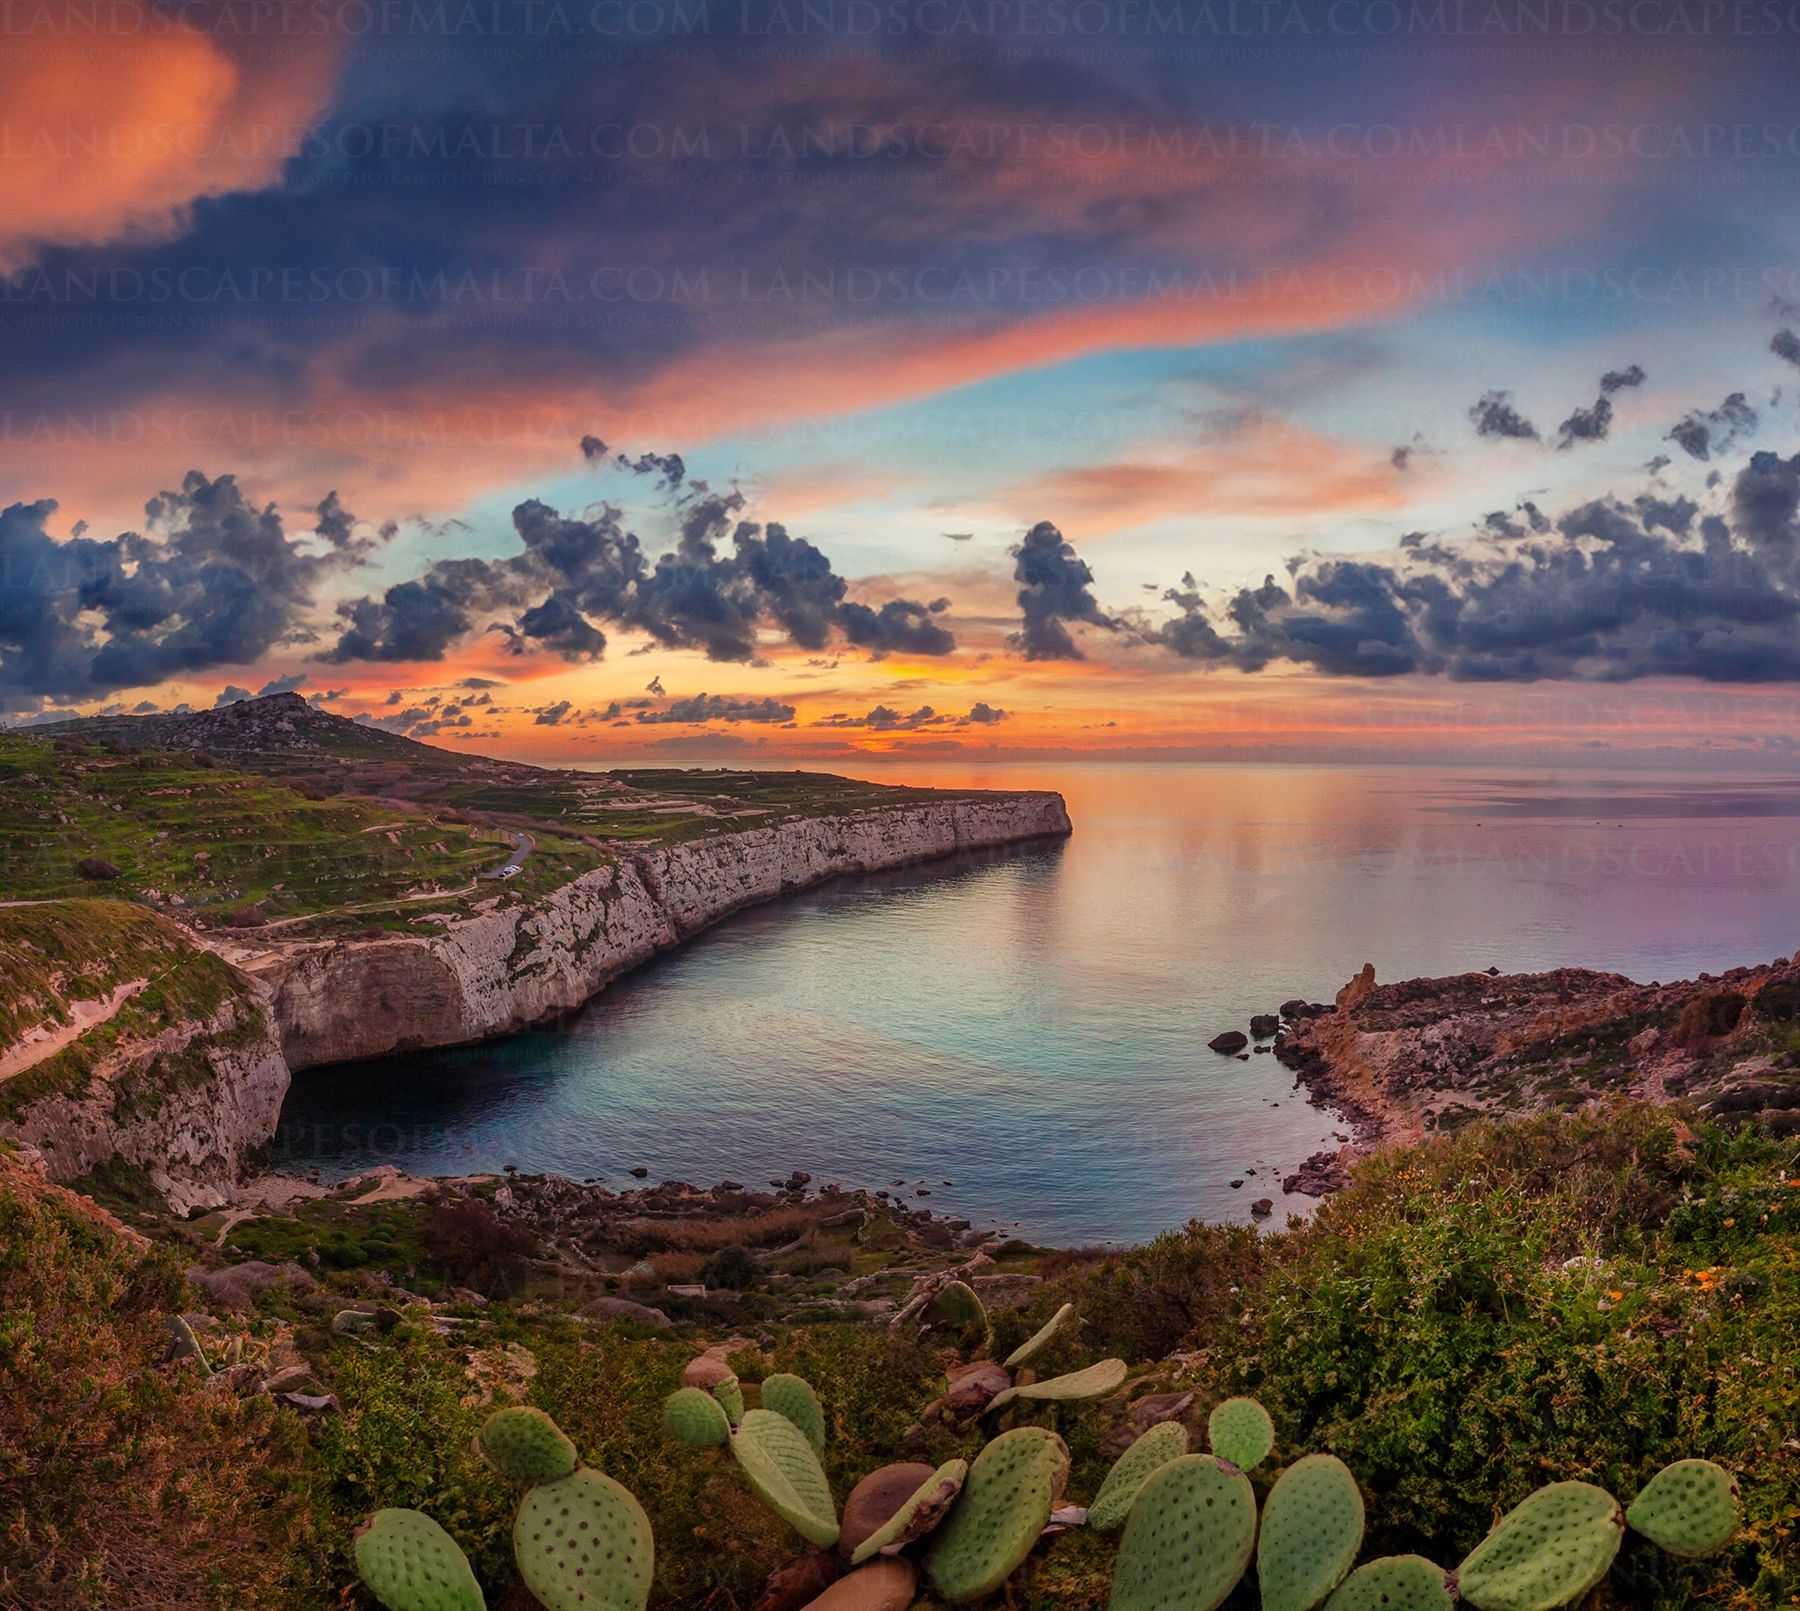 Fomm ir rih bay at sunset.
Fine art panoramas of Malta photography at fomm ir rih 